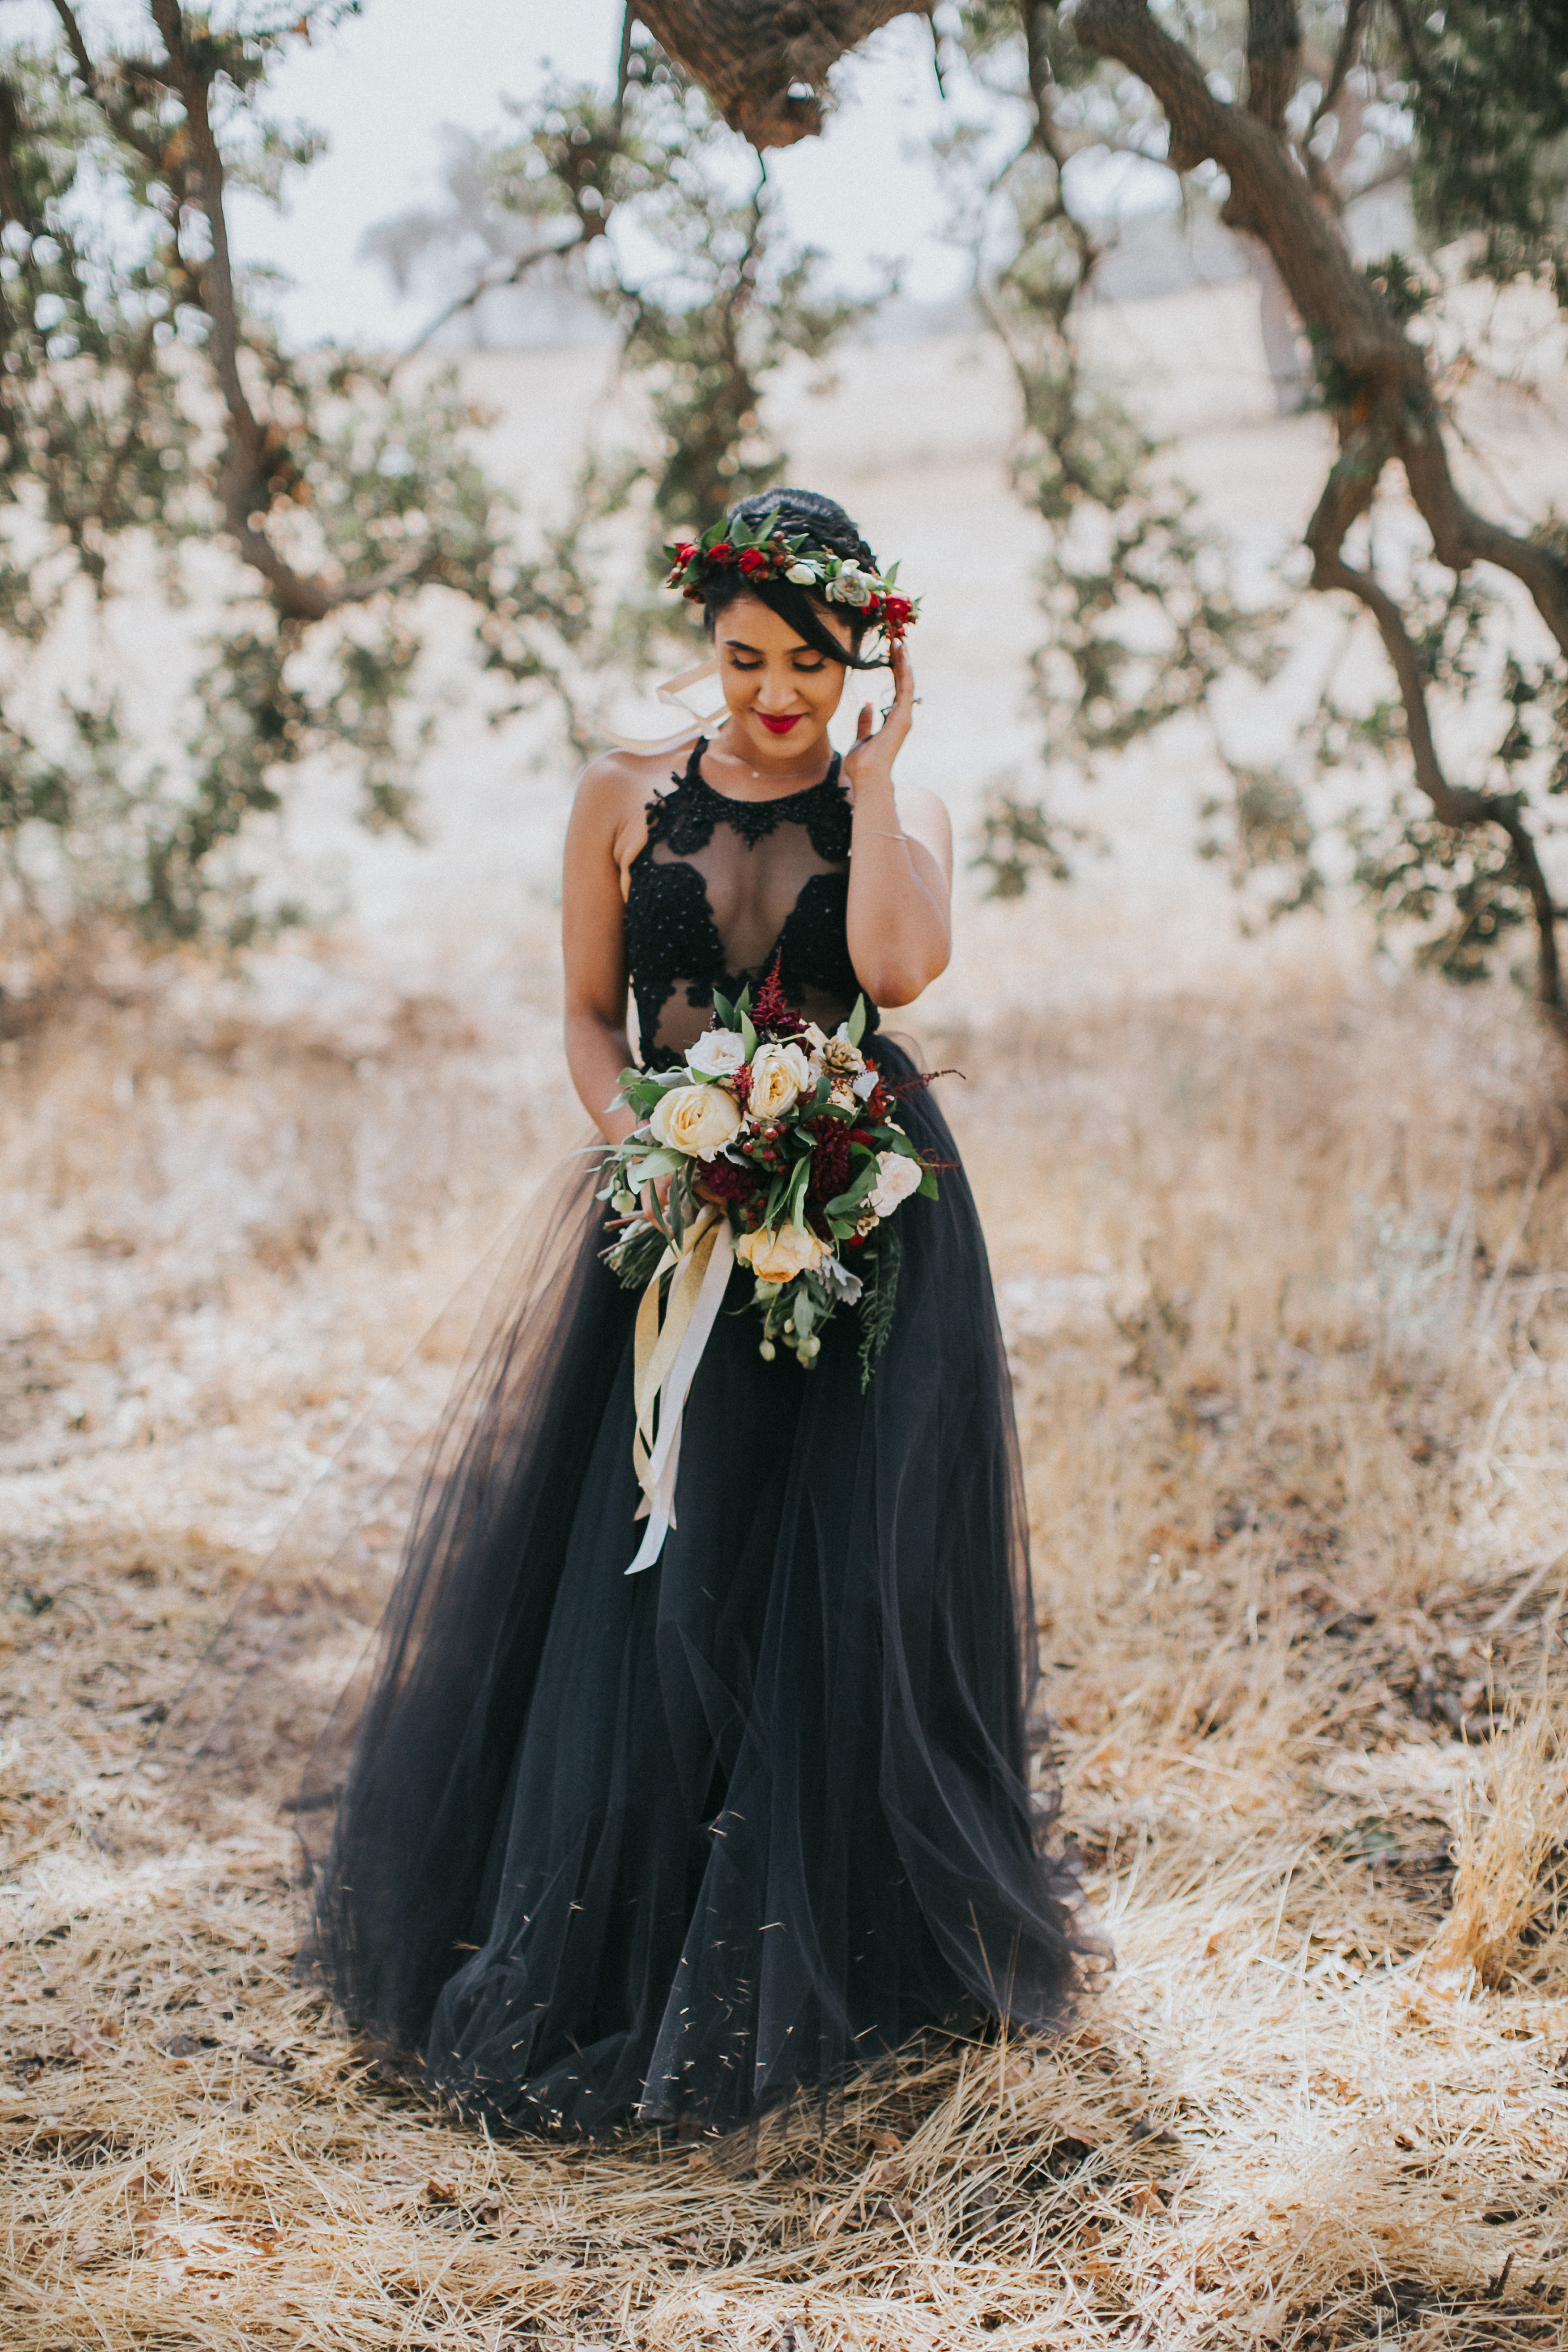 black wedding dress for bride